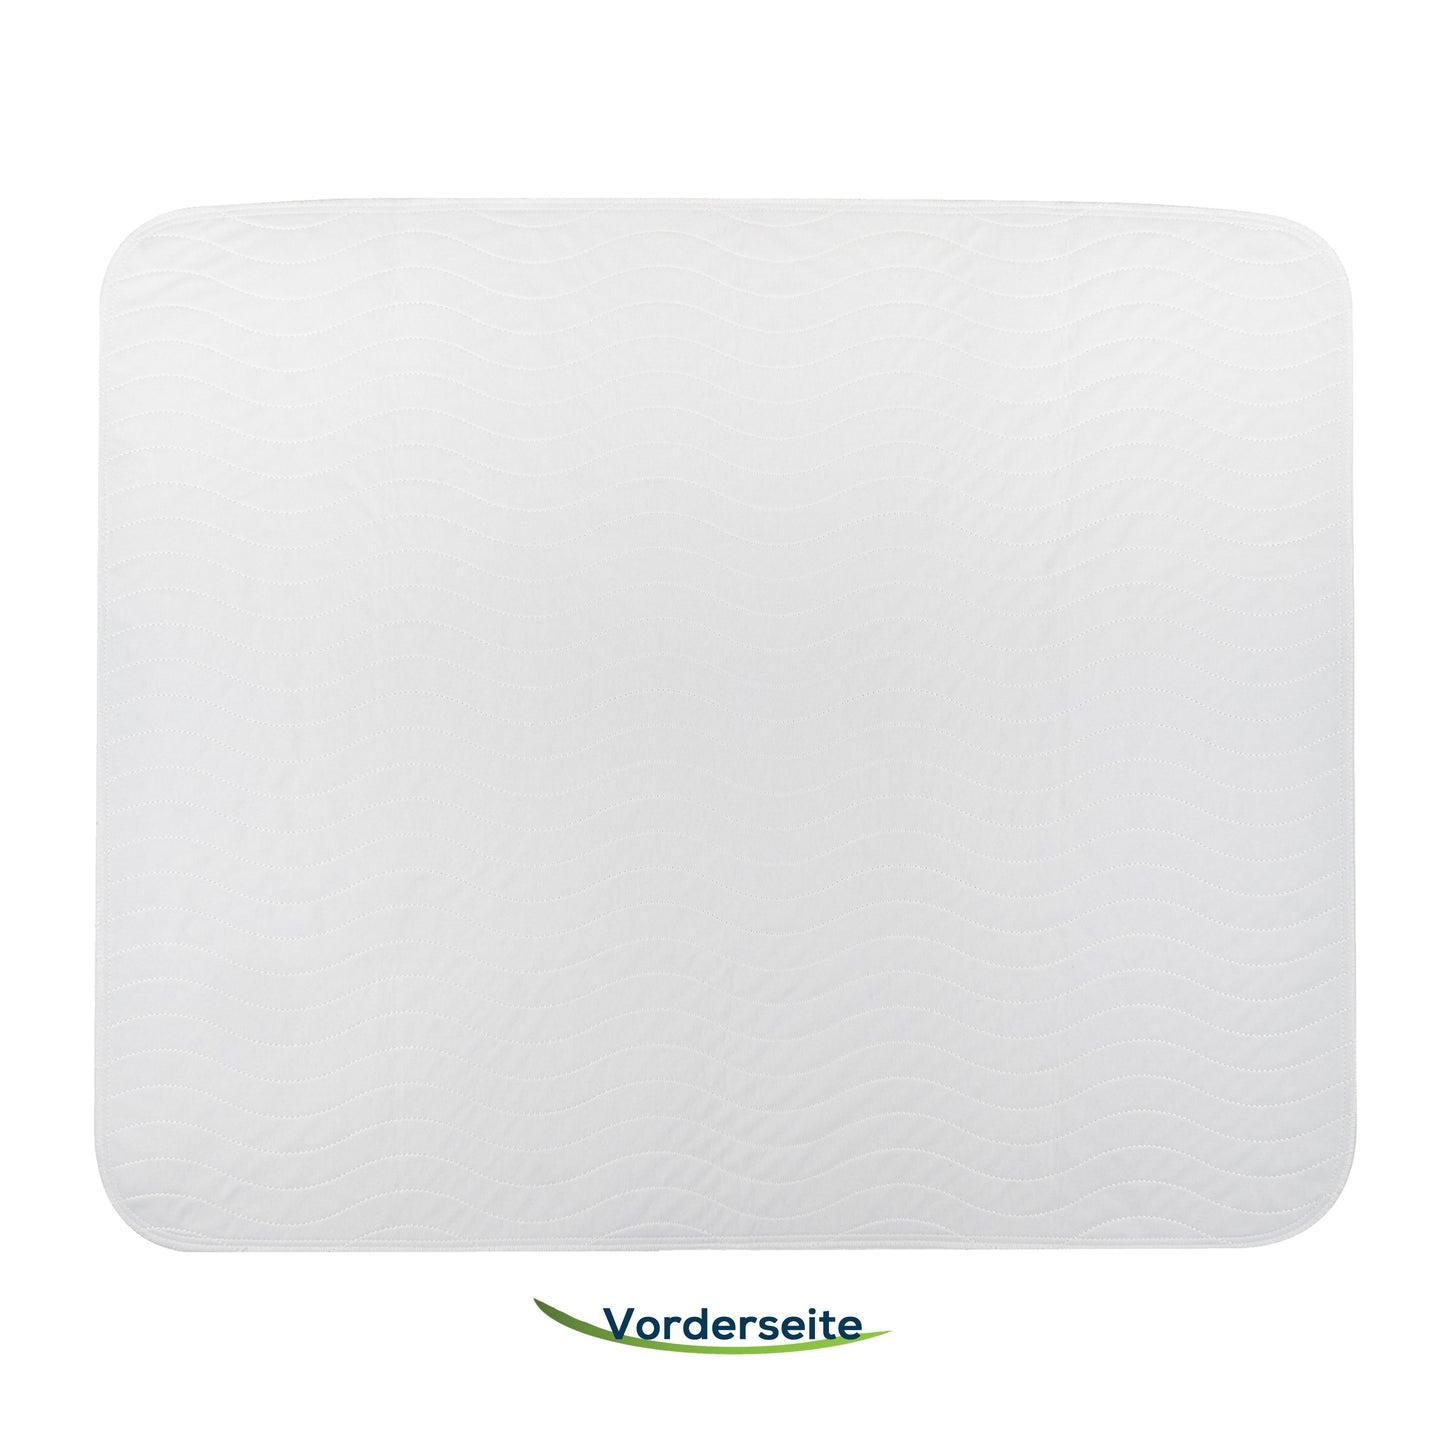 Sensalou incontinence pad waterproof, washable